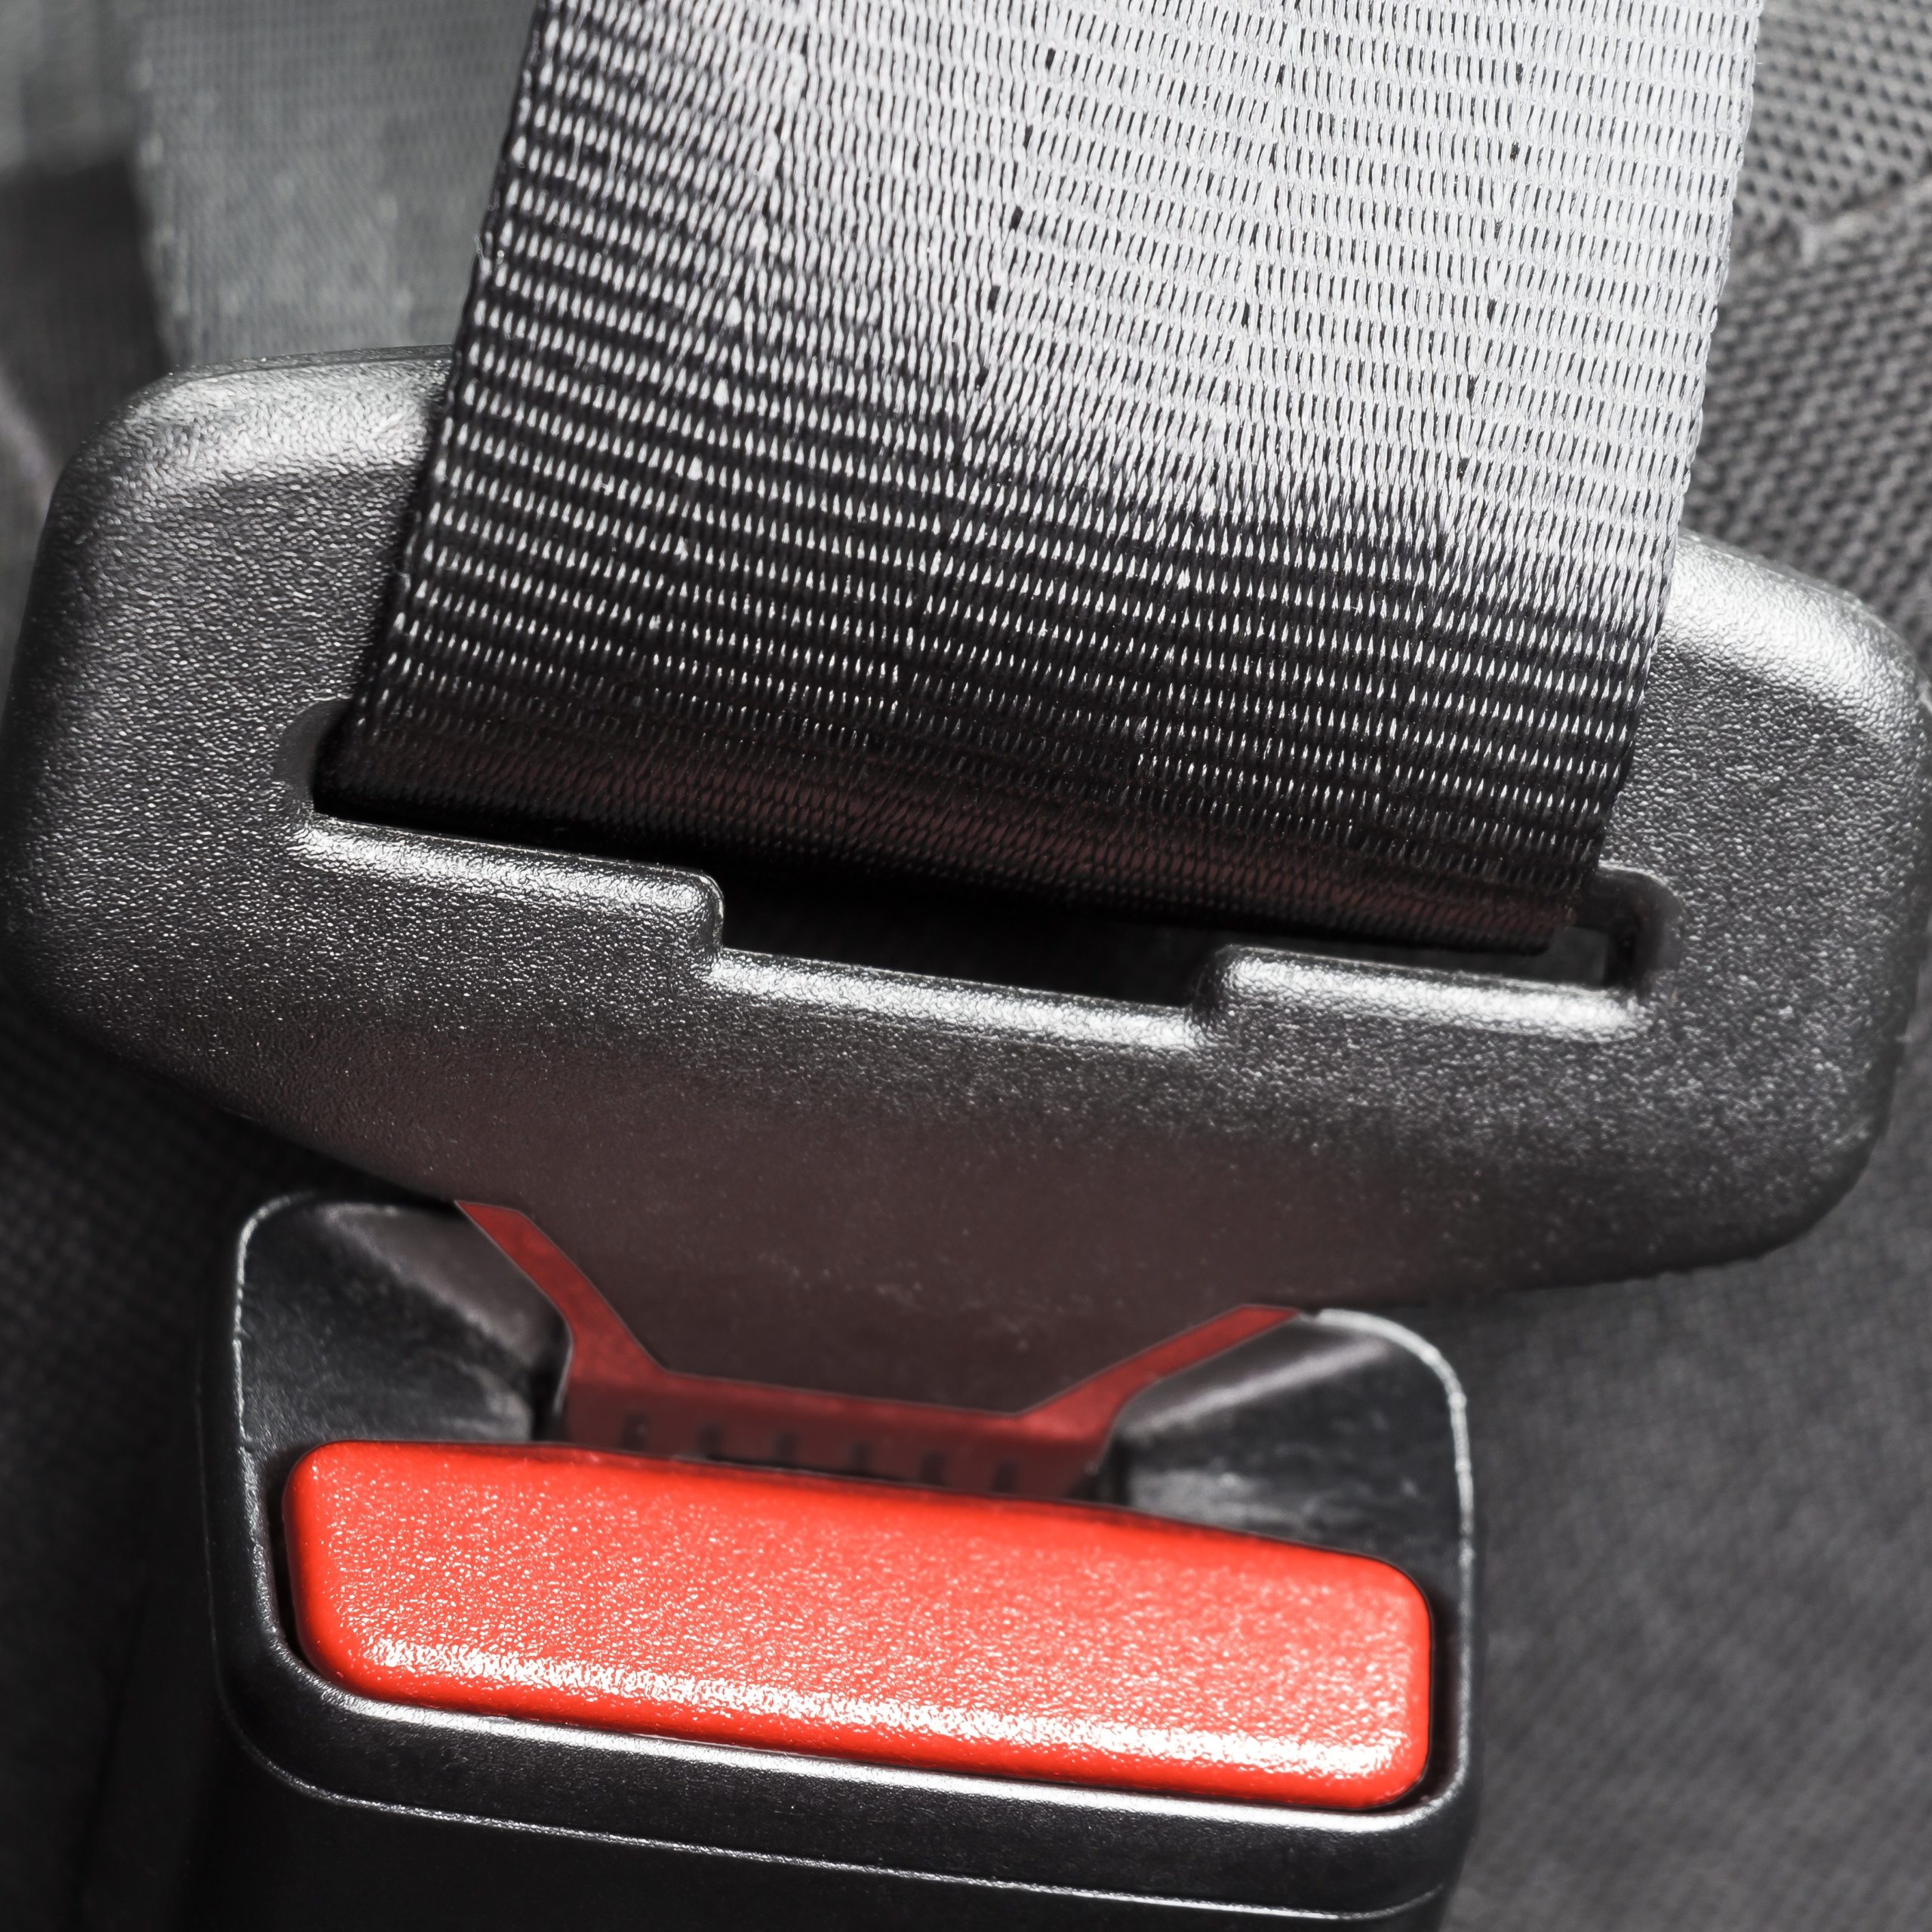 seat belt push button